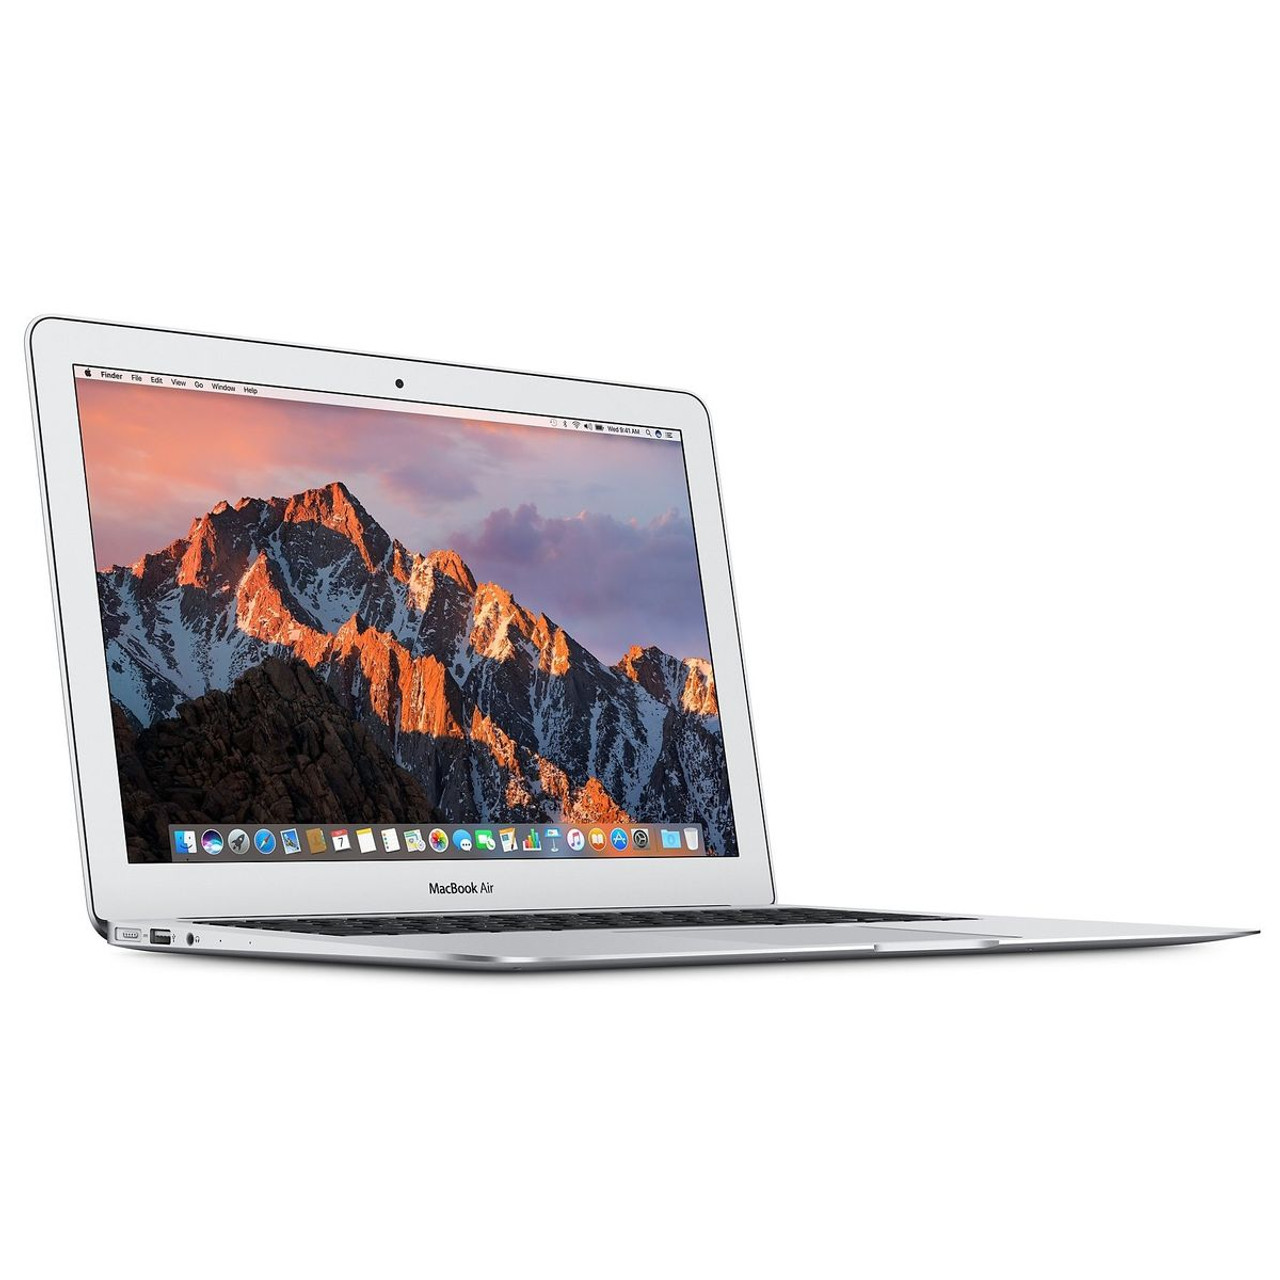 Apple® MacBook Air, 13-Inch, 8GB RAM, 256GB SSD, MQD42LL/A product image